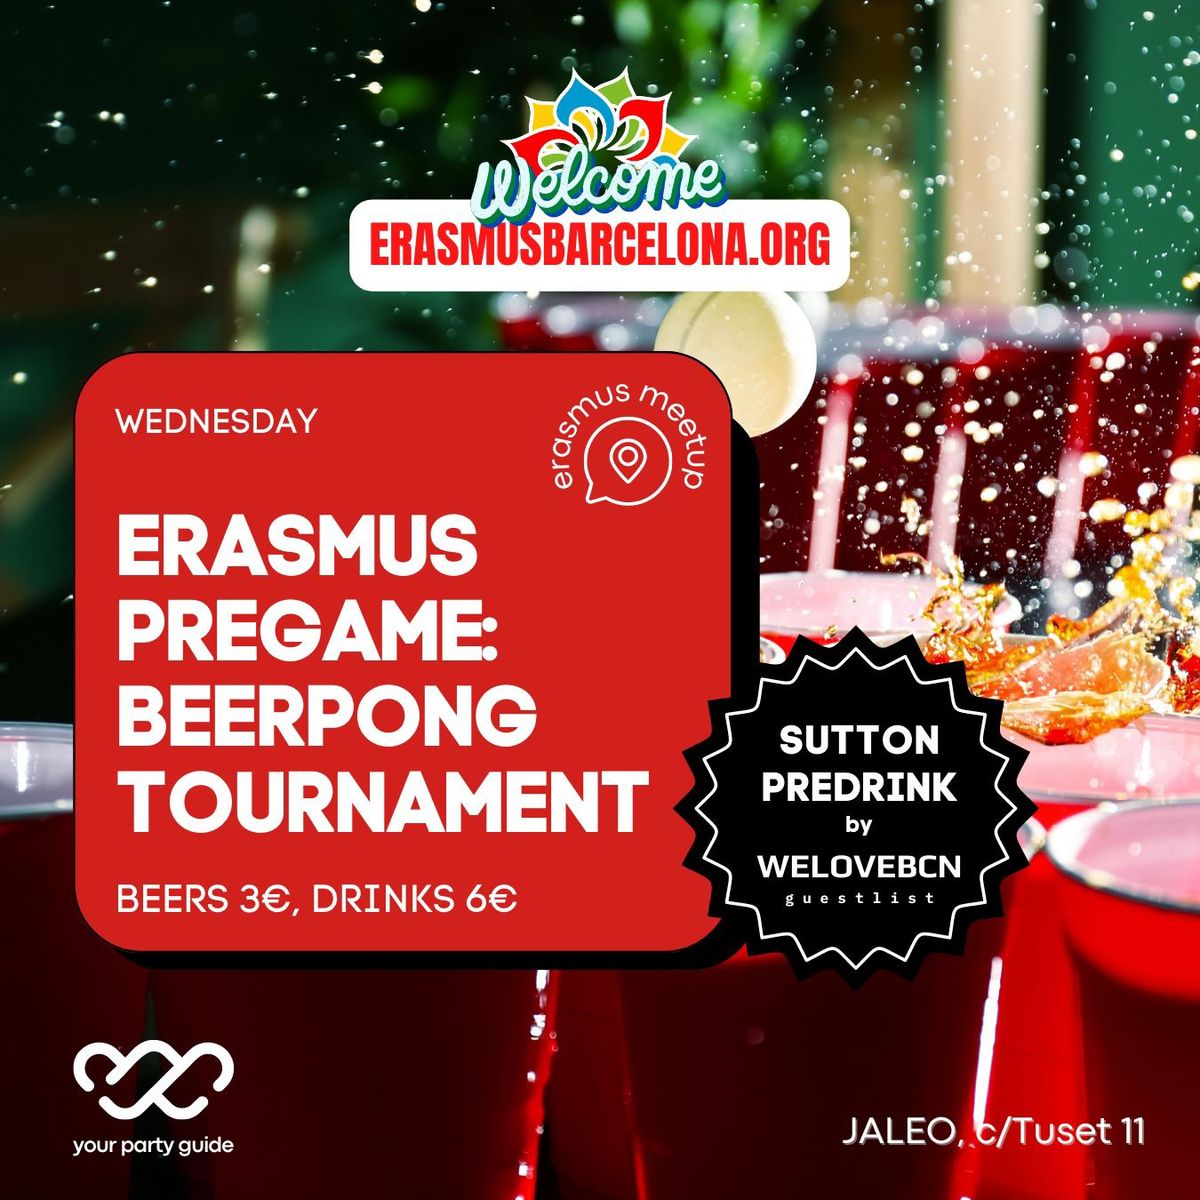 EVERY Wednesday Erasmus Beerpong tournament + SUTTON Party with WELOVEBCN LIST